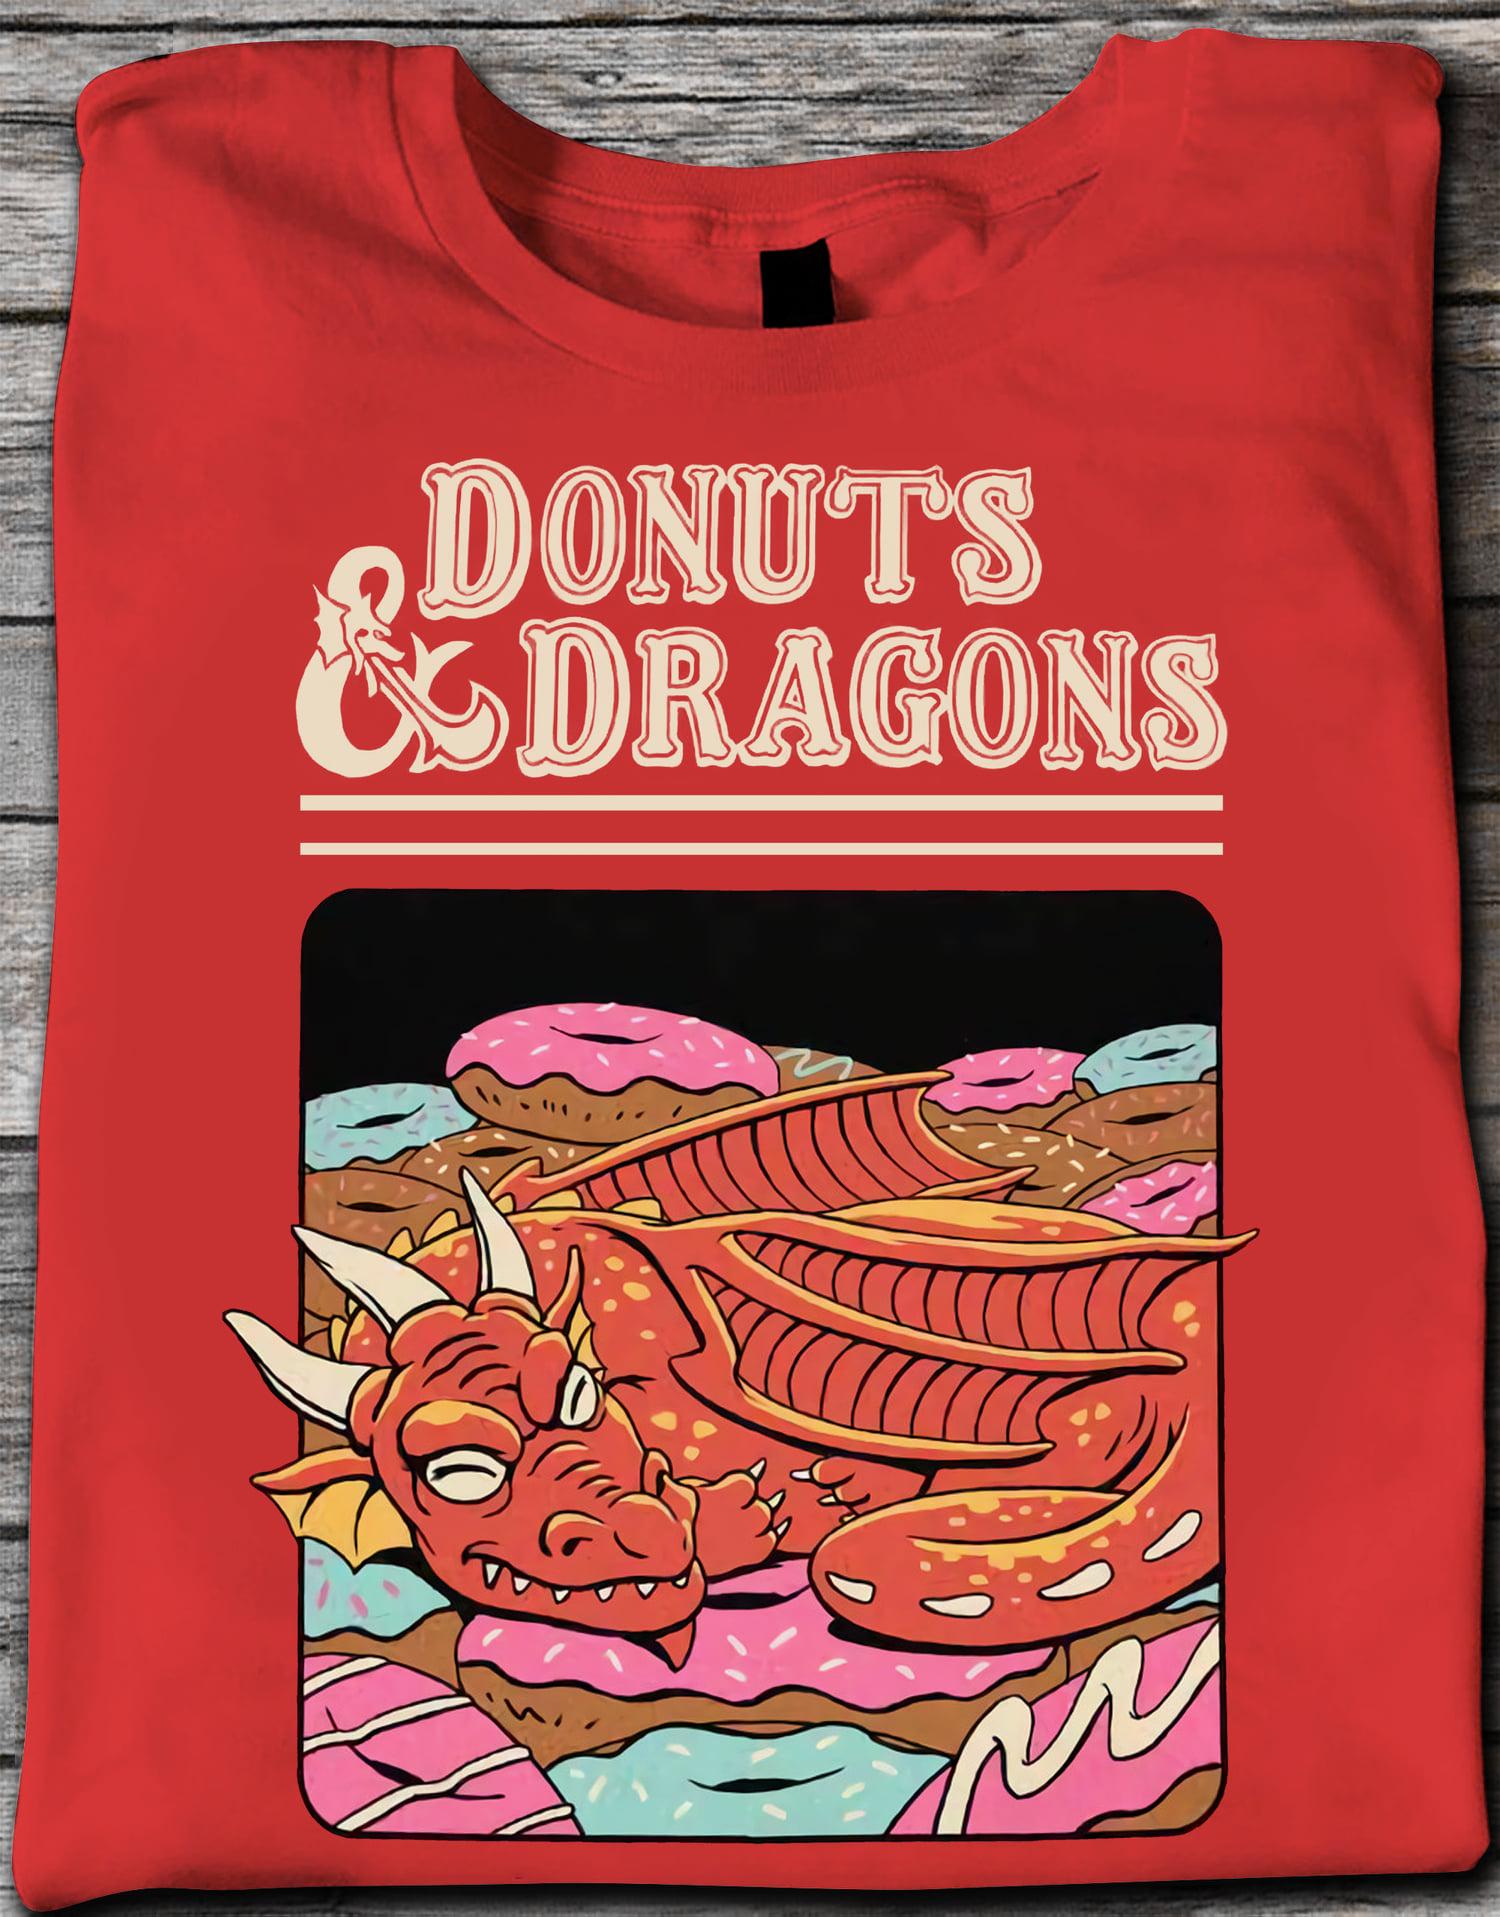 Donut Cake Dragon Sleeping - Donuts And Dragons